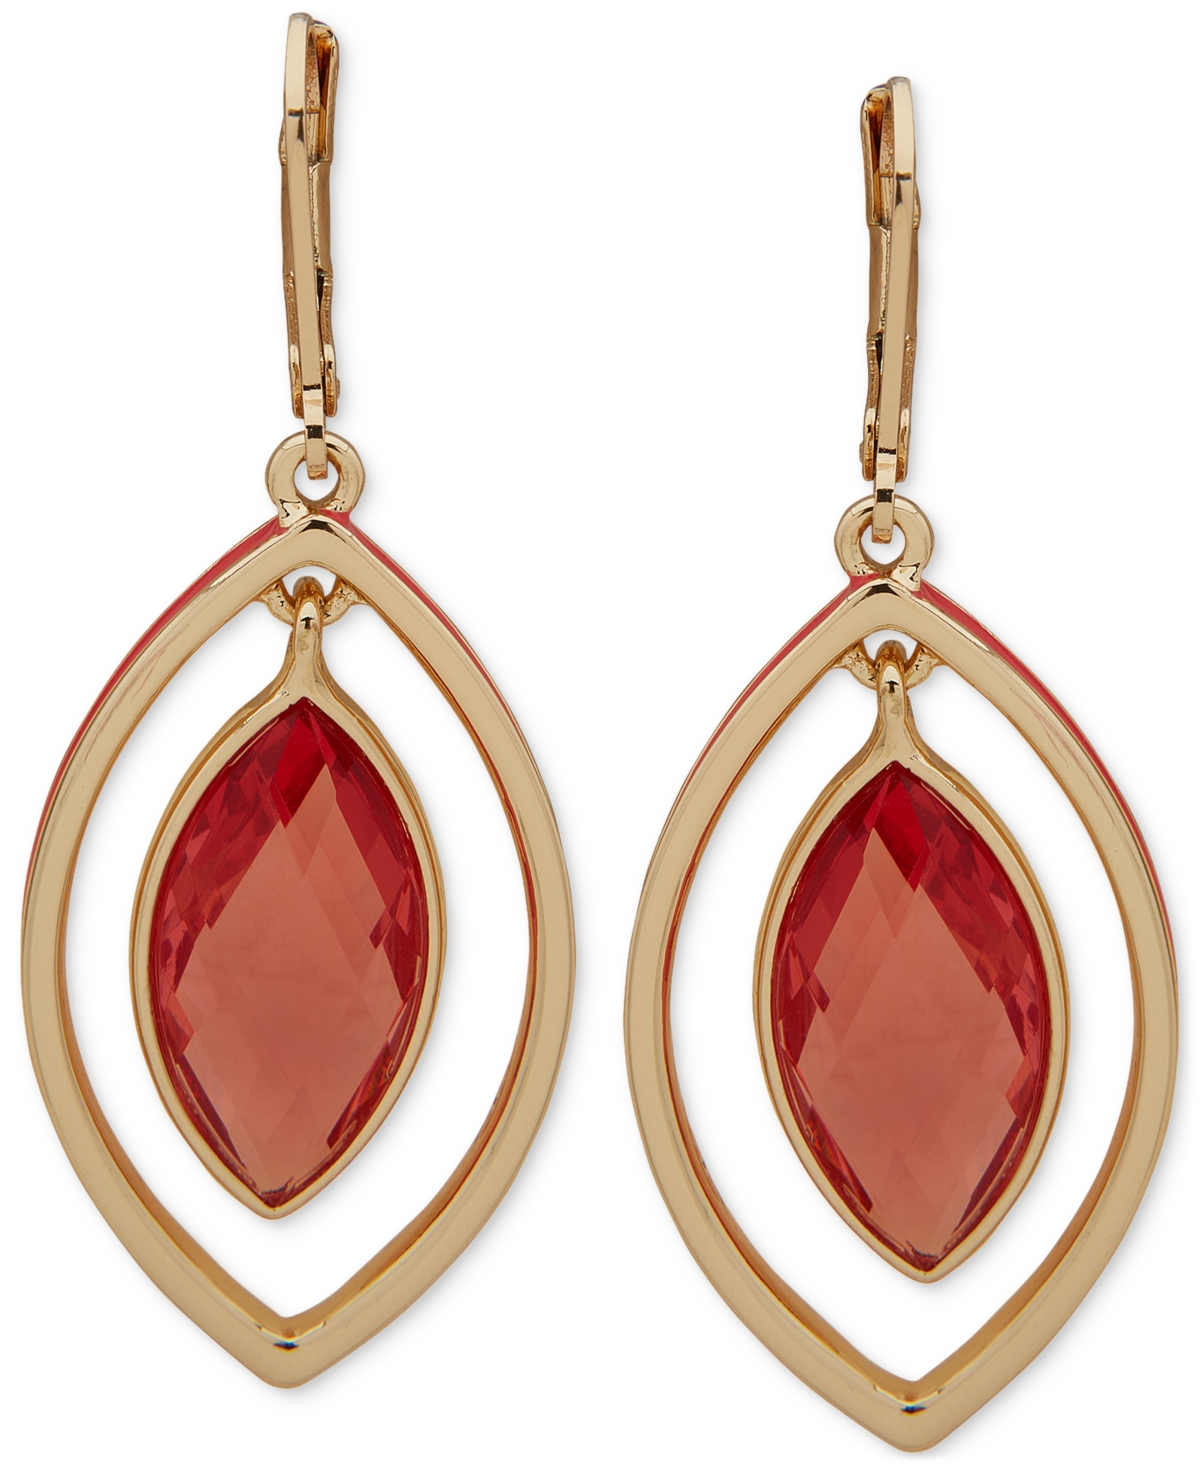 Gold-Tone Navette Stone Orbital Drop Earrings - Pink